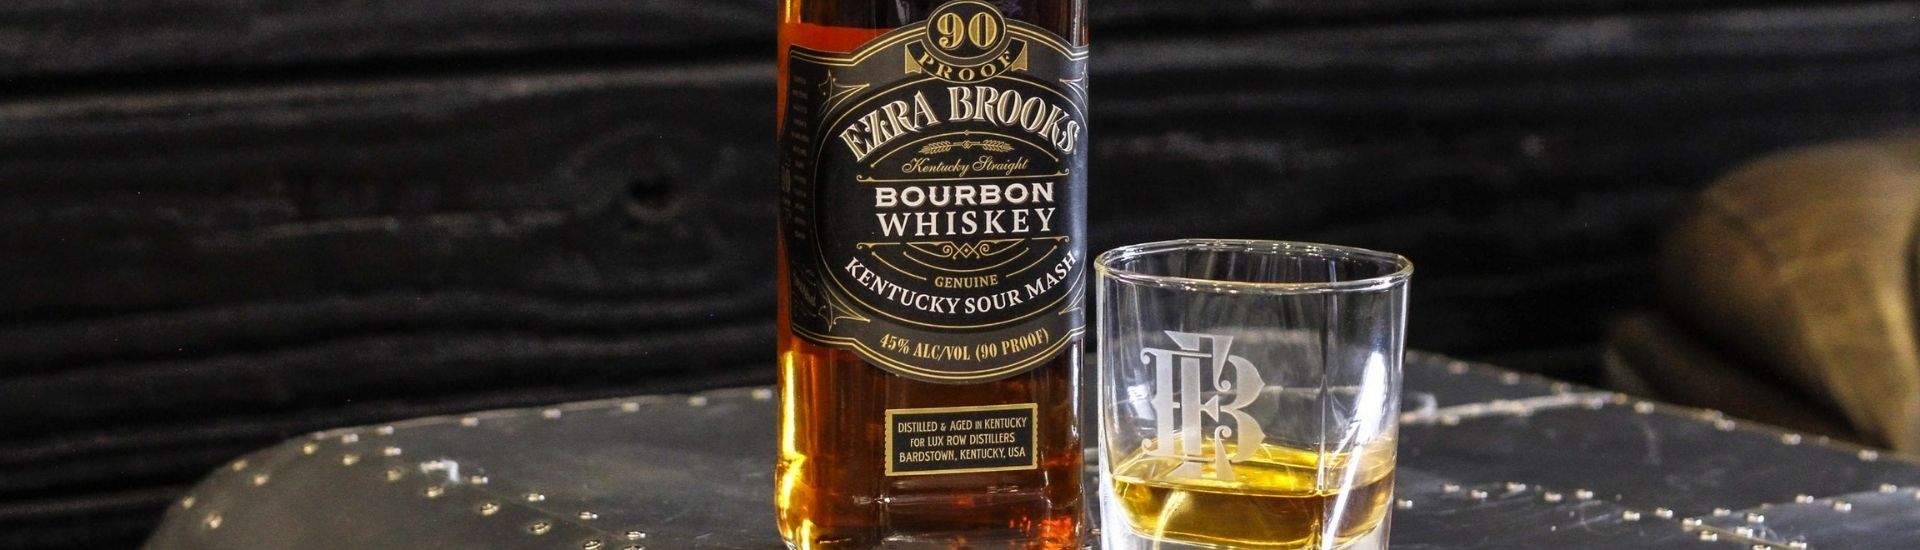 ezra brooks bourbon bottle and glass